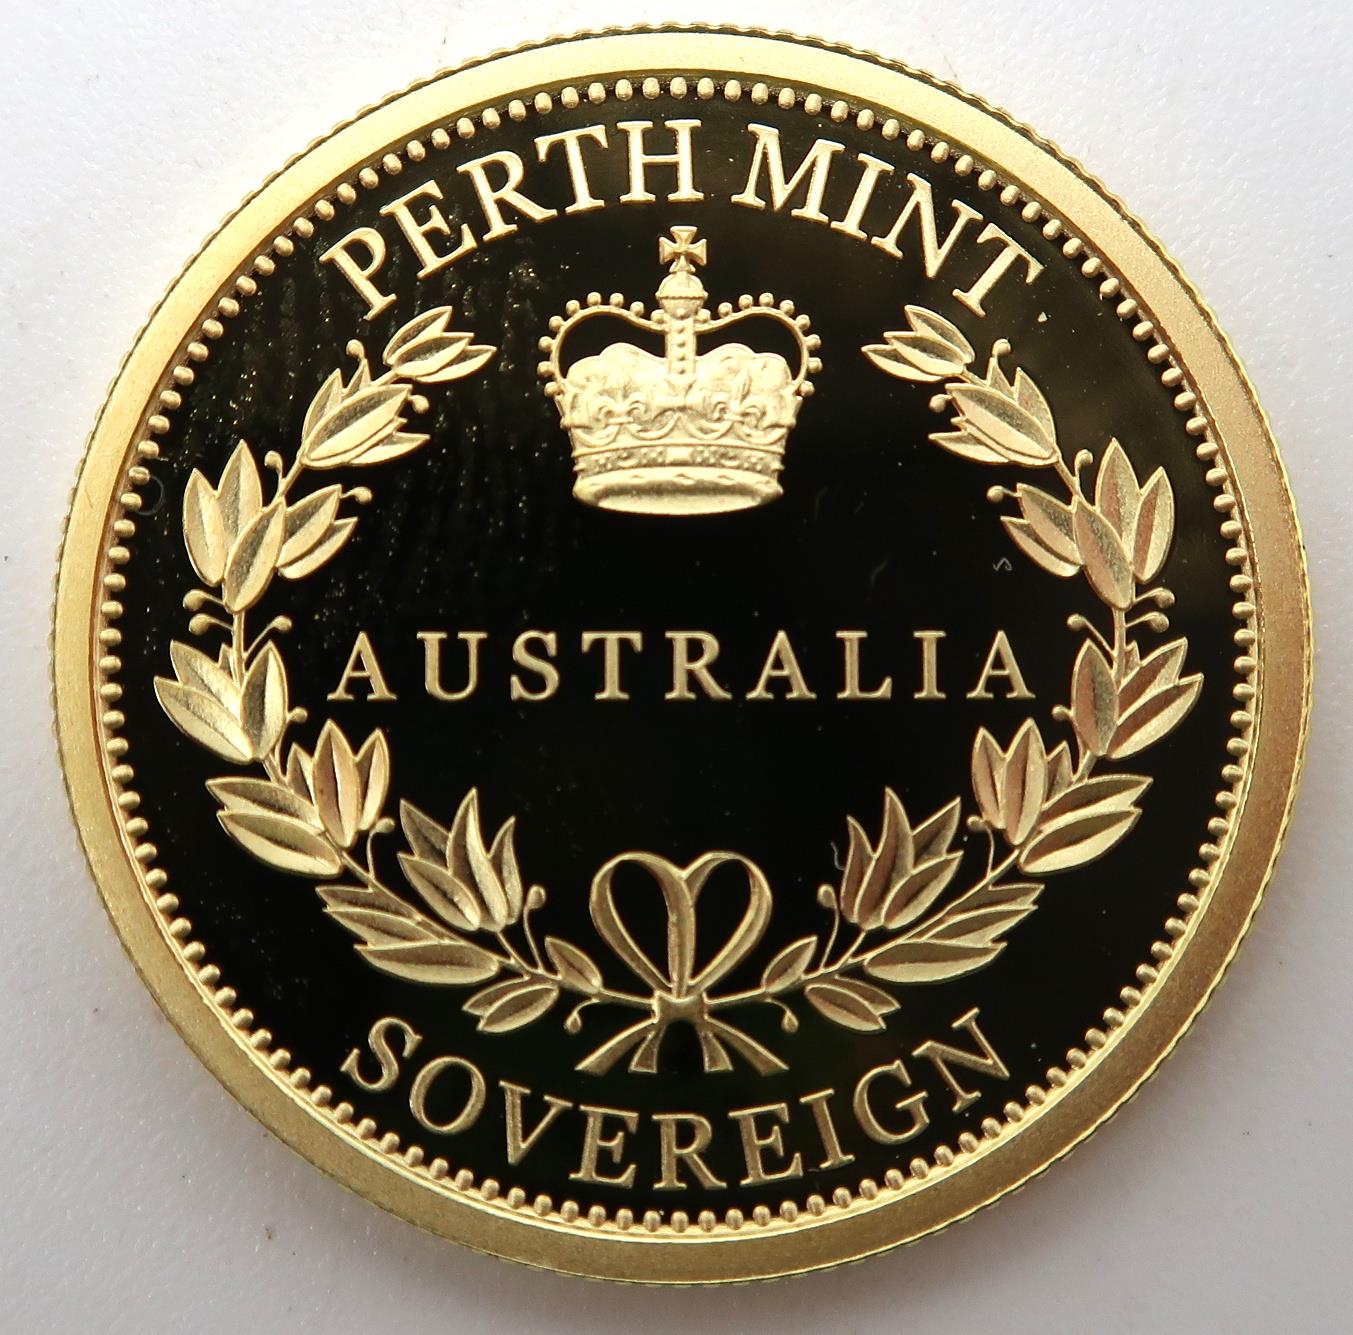 ELIZABETH II Australian Sovereign 2017 Commemorative Issue 25 Dollars Obverse 4th portrait of - Image 2 of 4